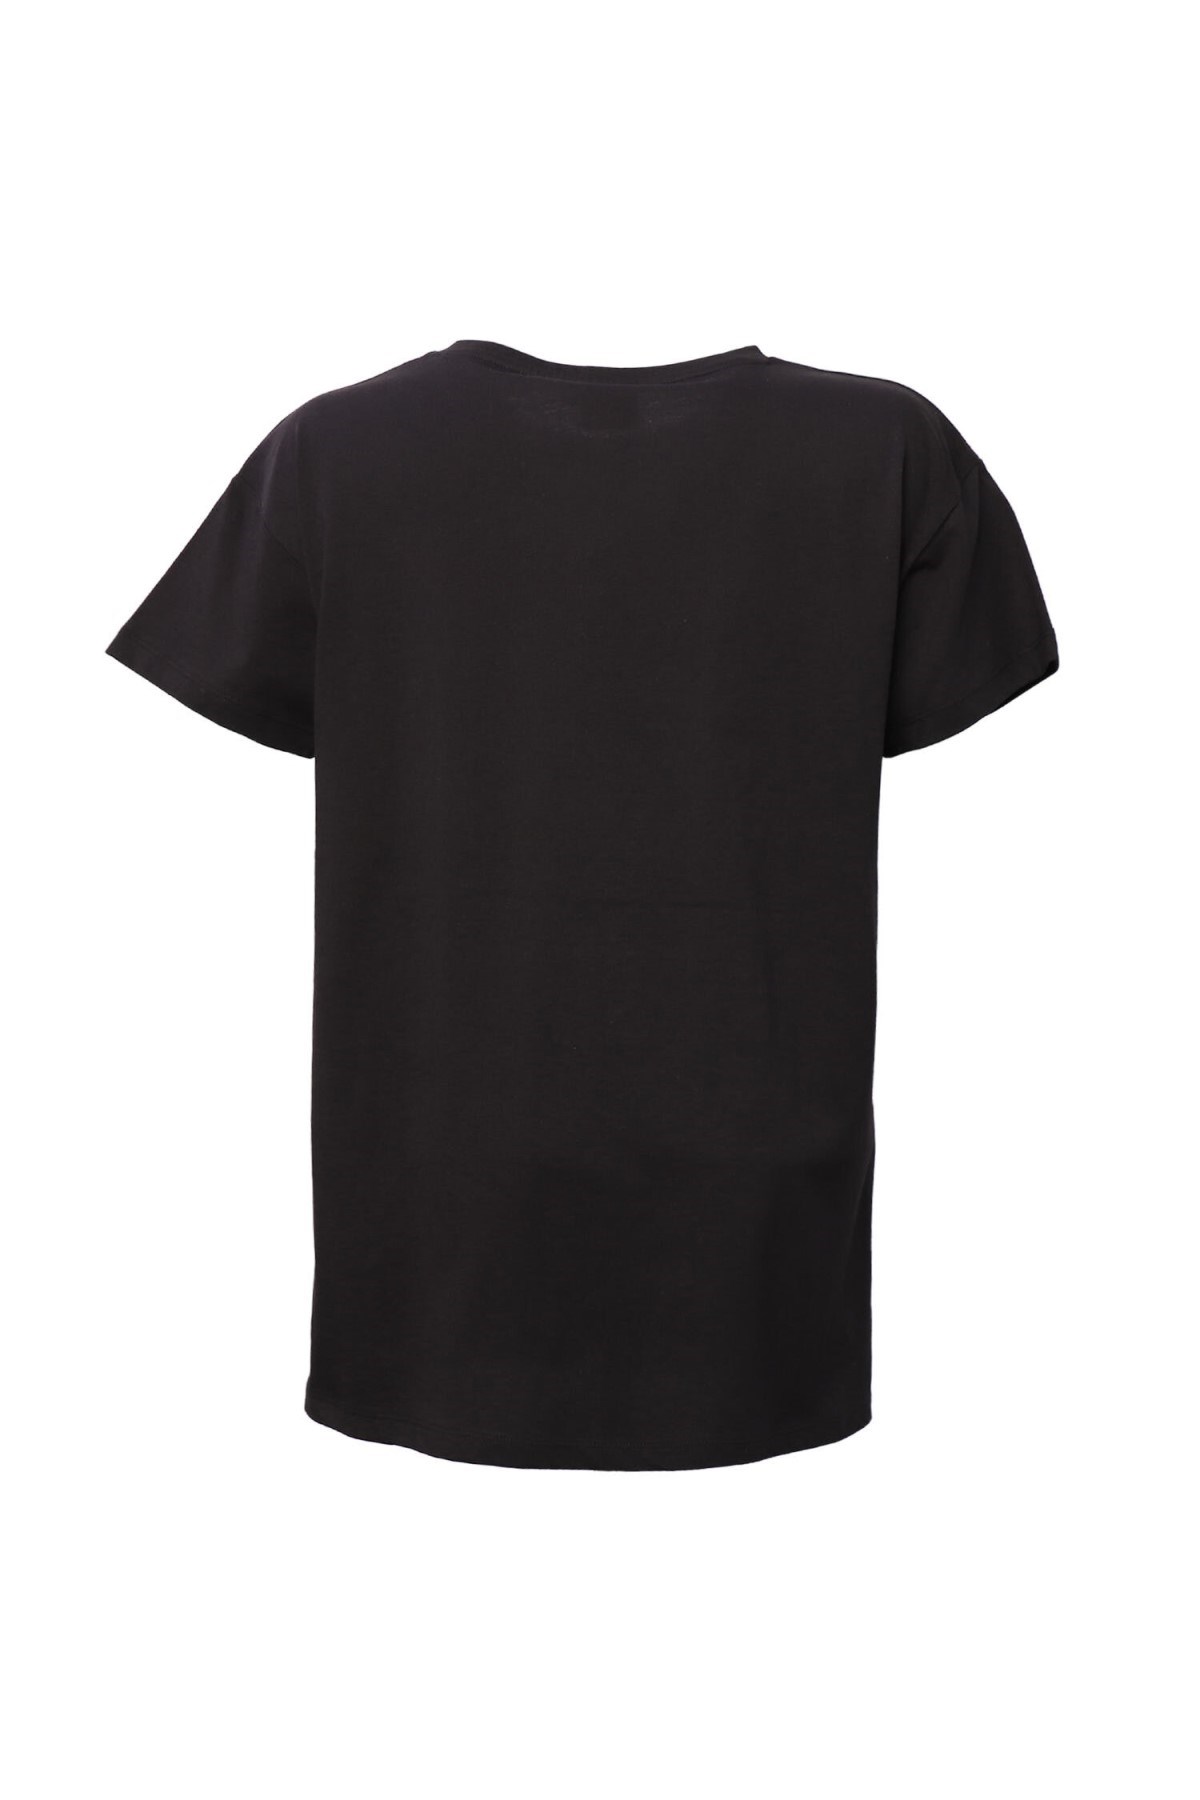 Hummel Kadın T-Shirt 911477-2001 Black